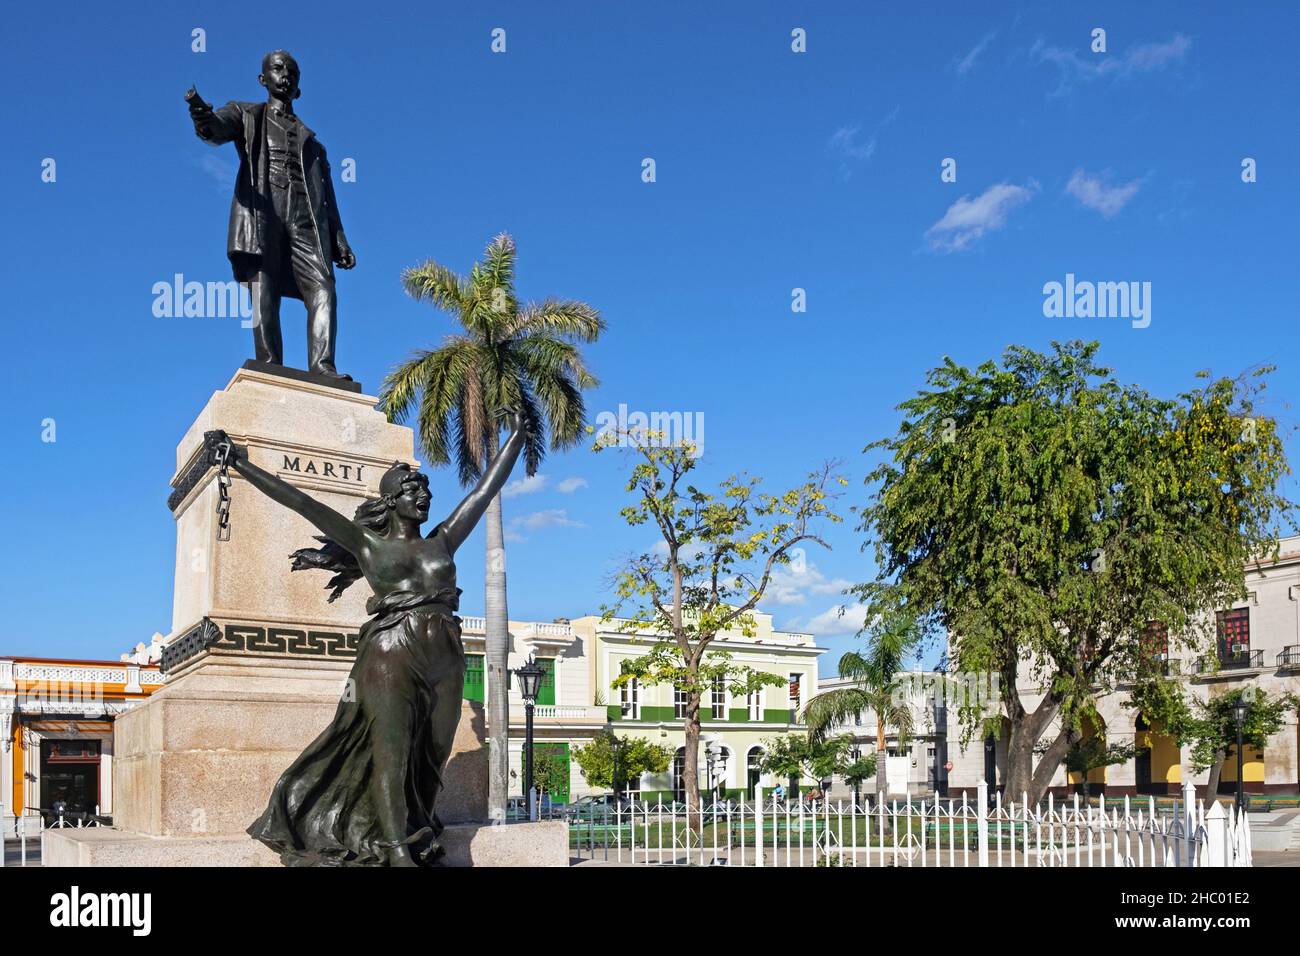 Estatua de la Libertad und Statue von José Martí, Befreier von Kuba im Parque de la Libertad / Liberty Park in der Stadt Matanzas auf der Insel Kuba Stockfoto